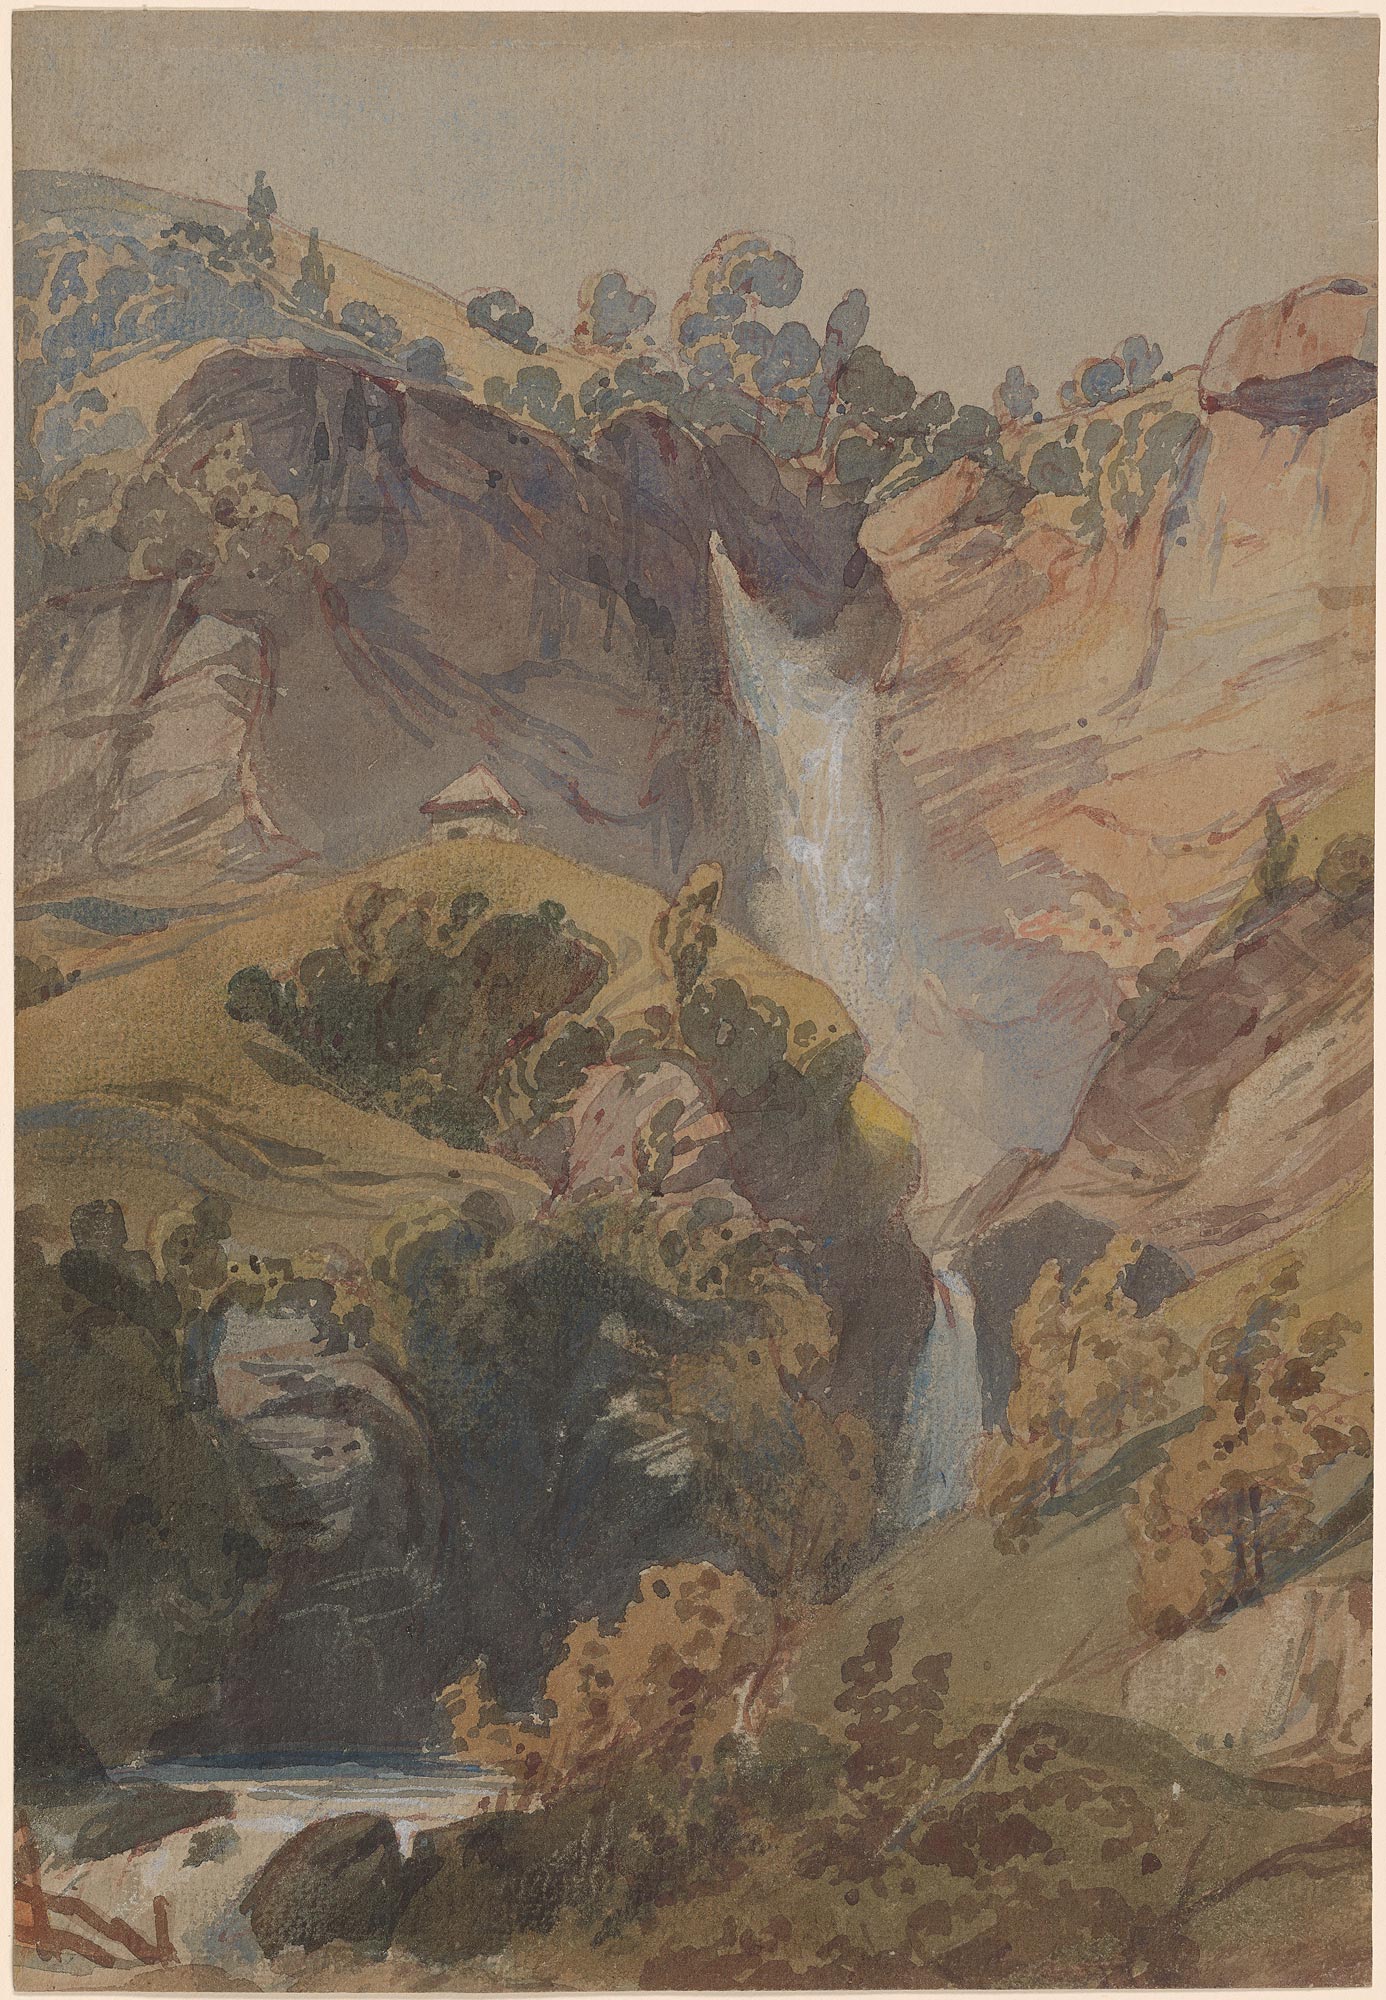 Richard Parkes Bonington | Reichenbach Falls | Drawings Online | The